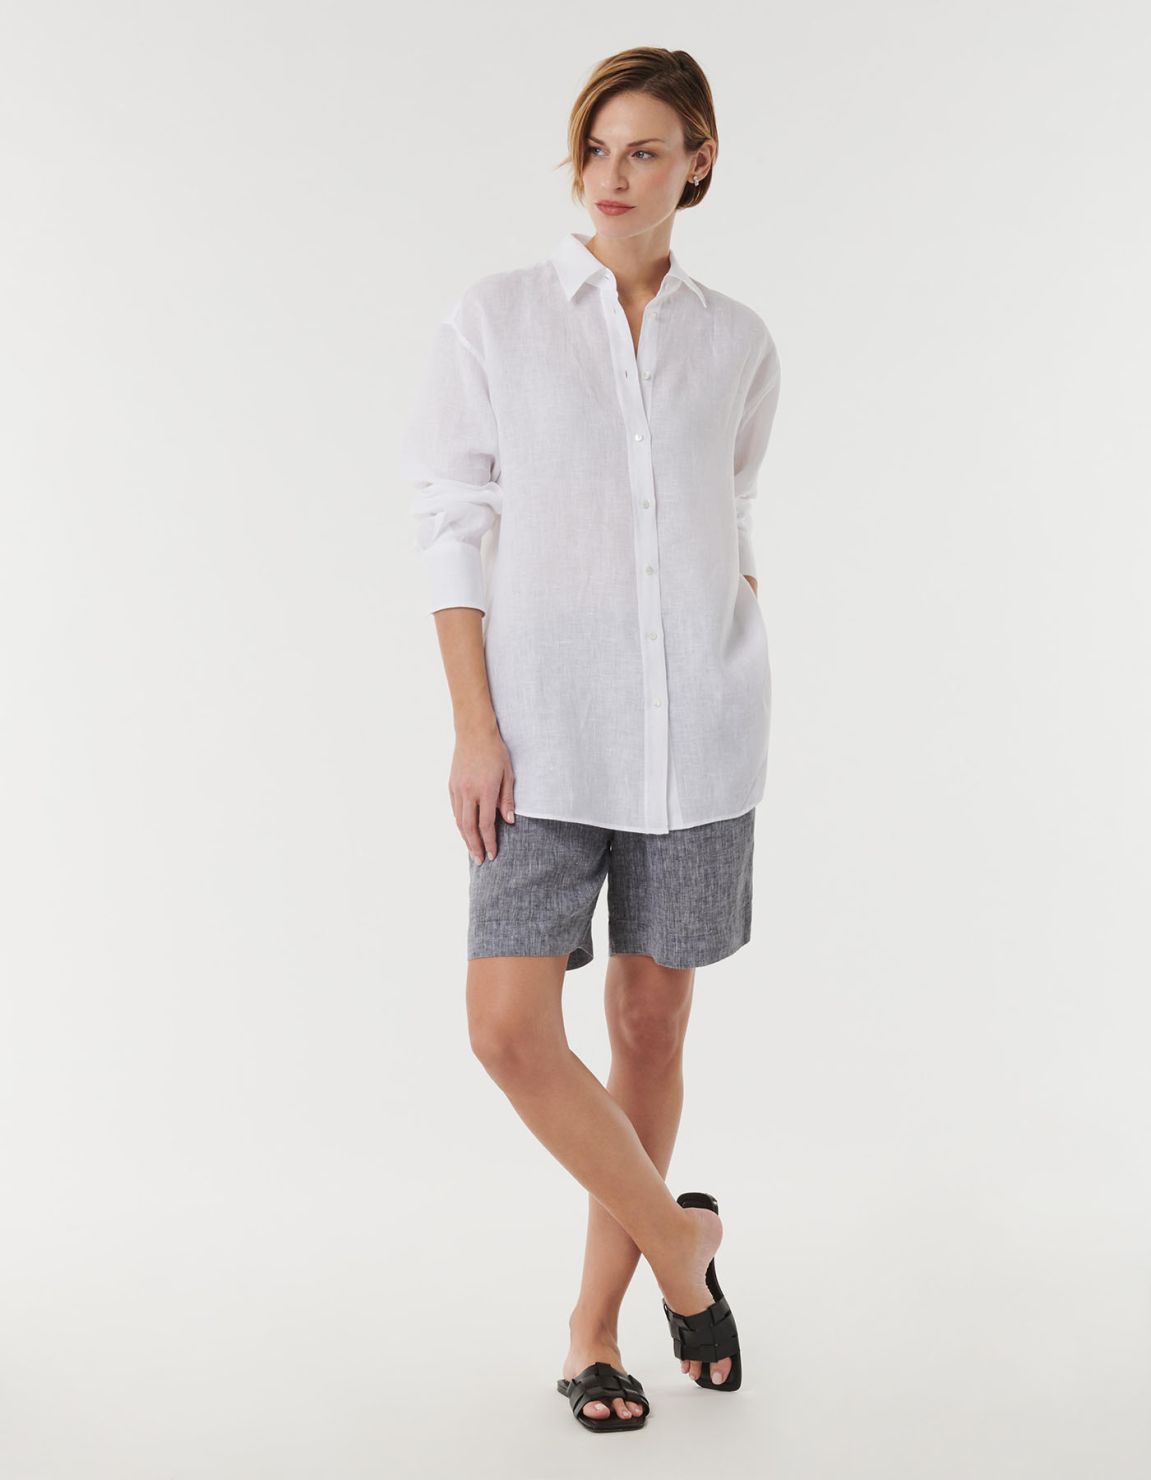 Shirt White Linen Solid colour Over 3